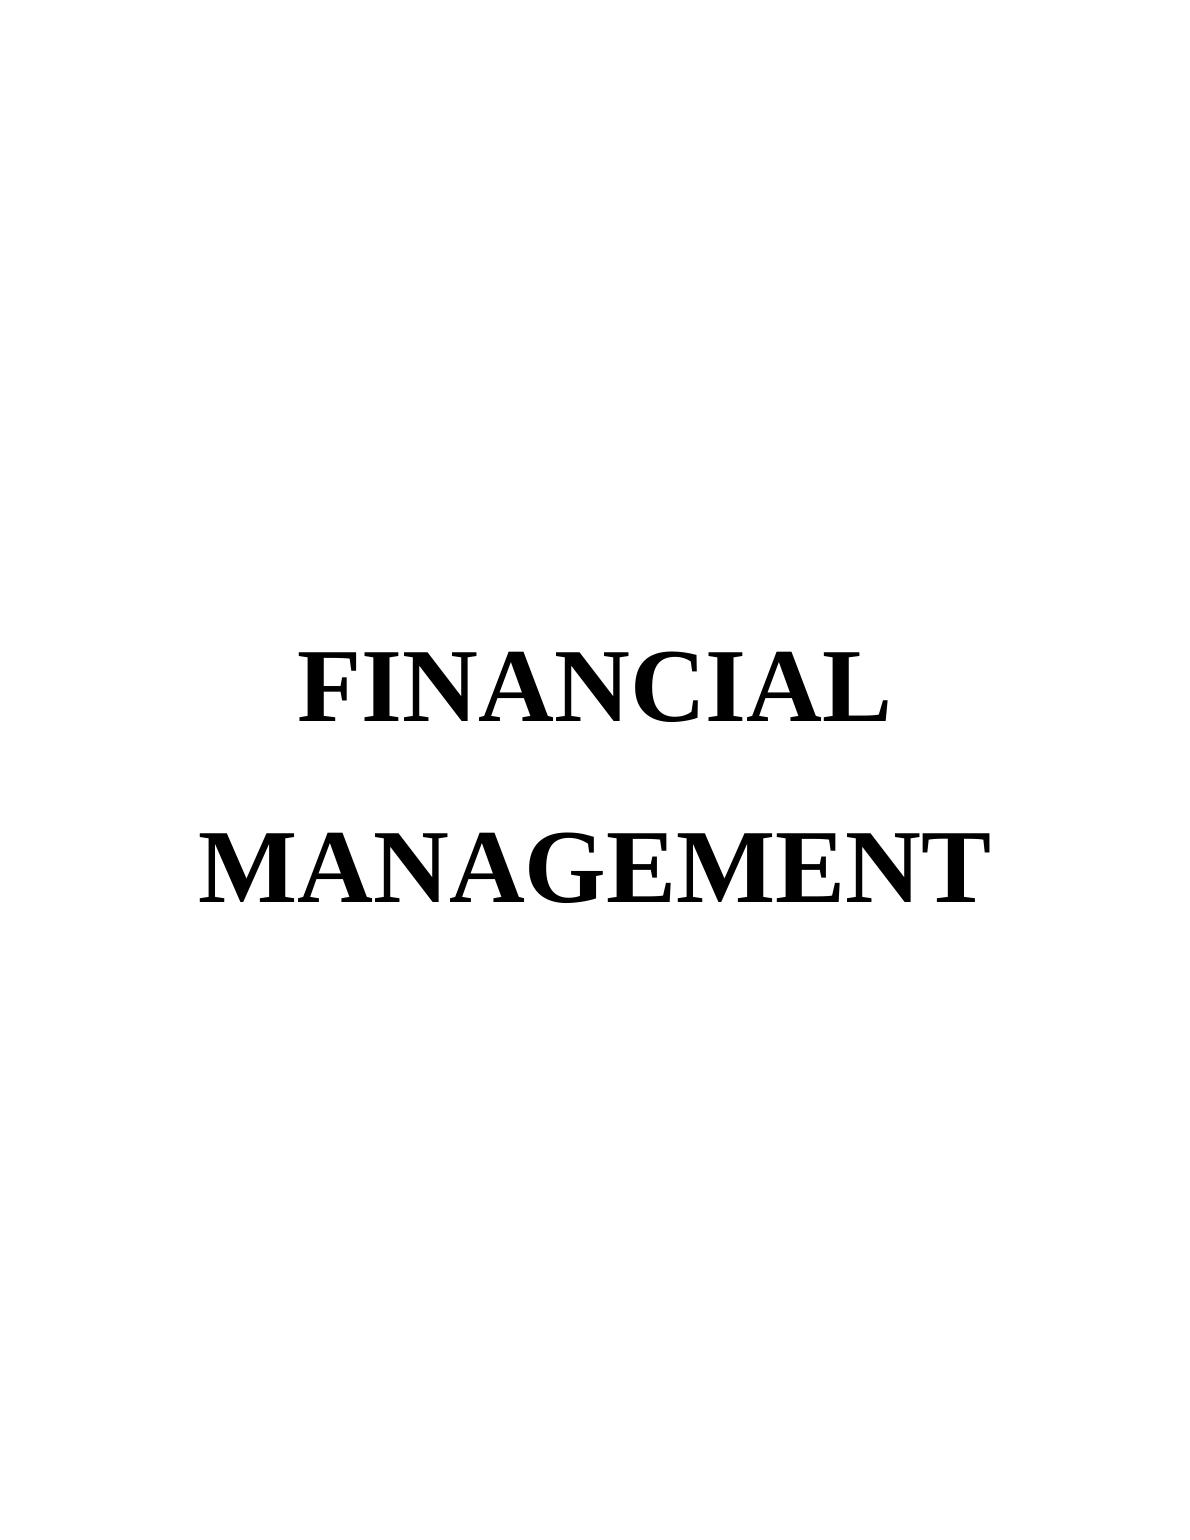 assignment of financial management